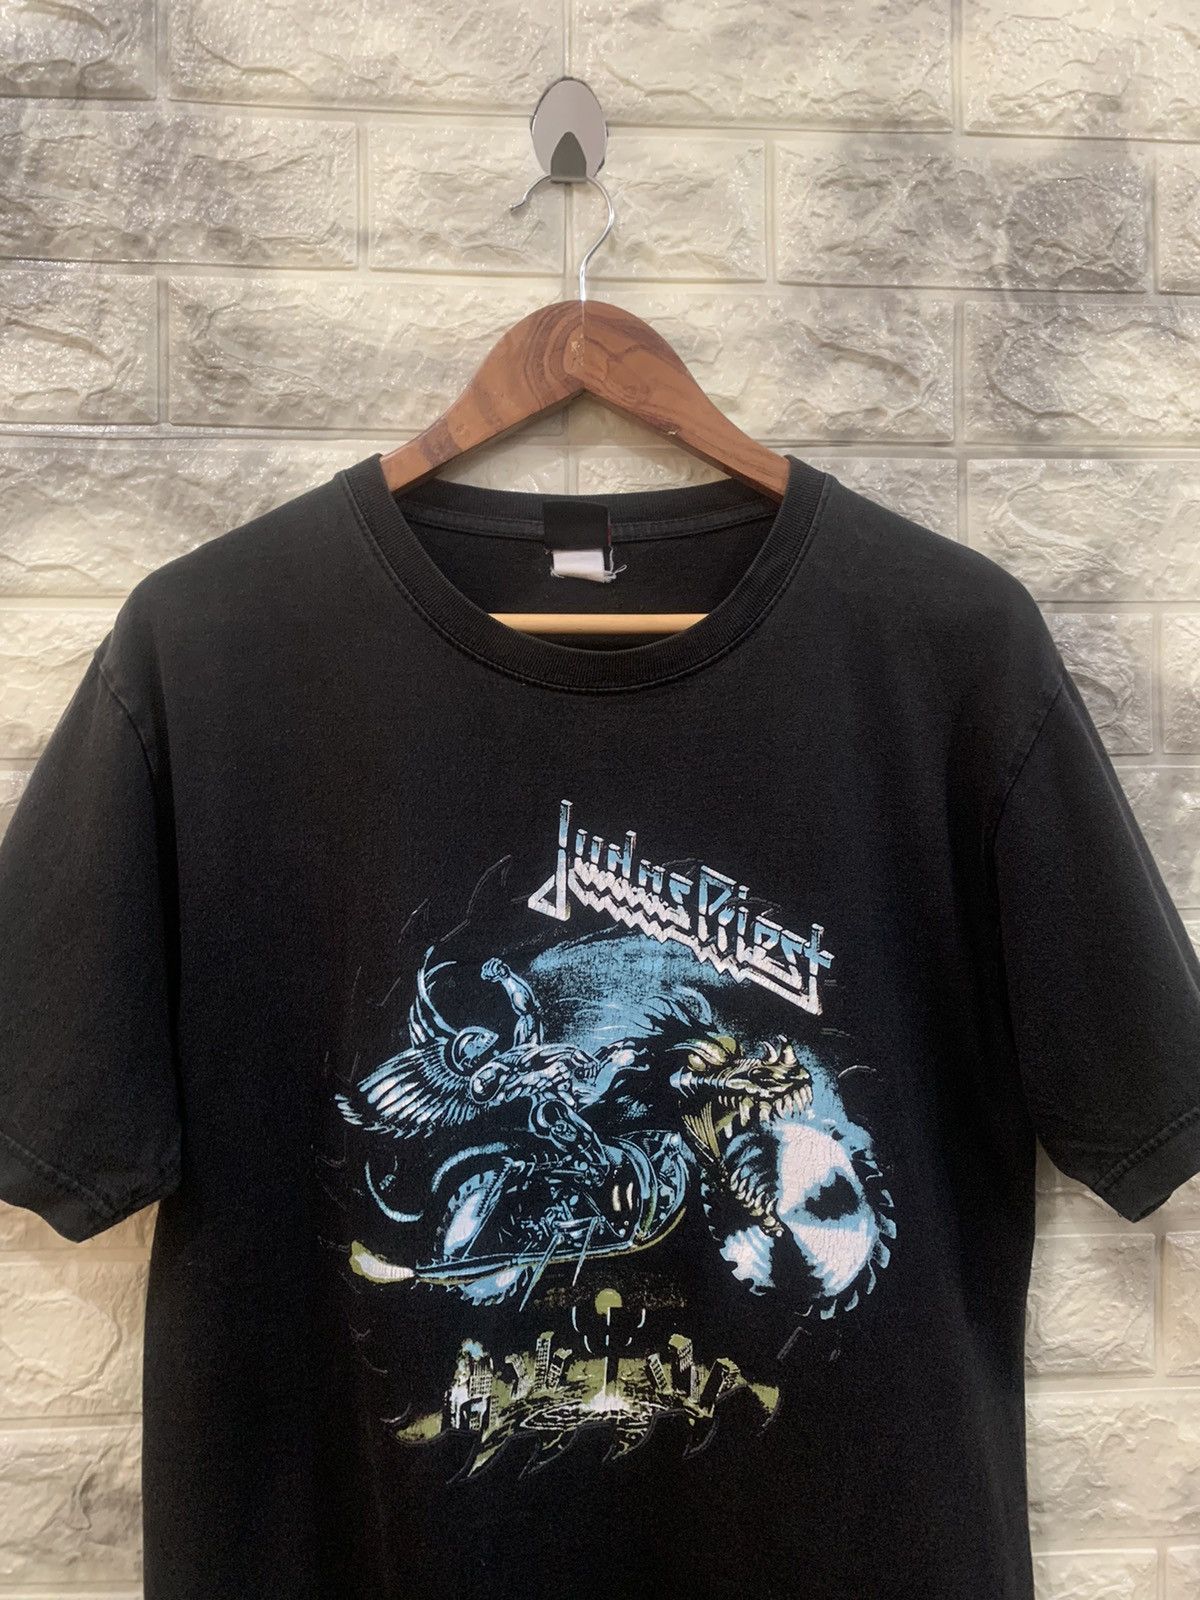 Vintage Vintage Judas priest band rock t-shirt Size US M / EU 48-50 / 2 - 6 Thumbnail